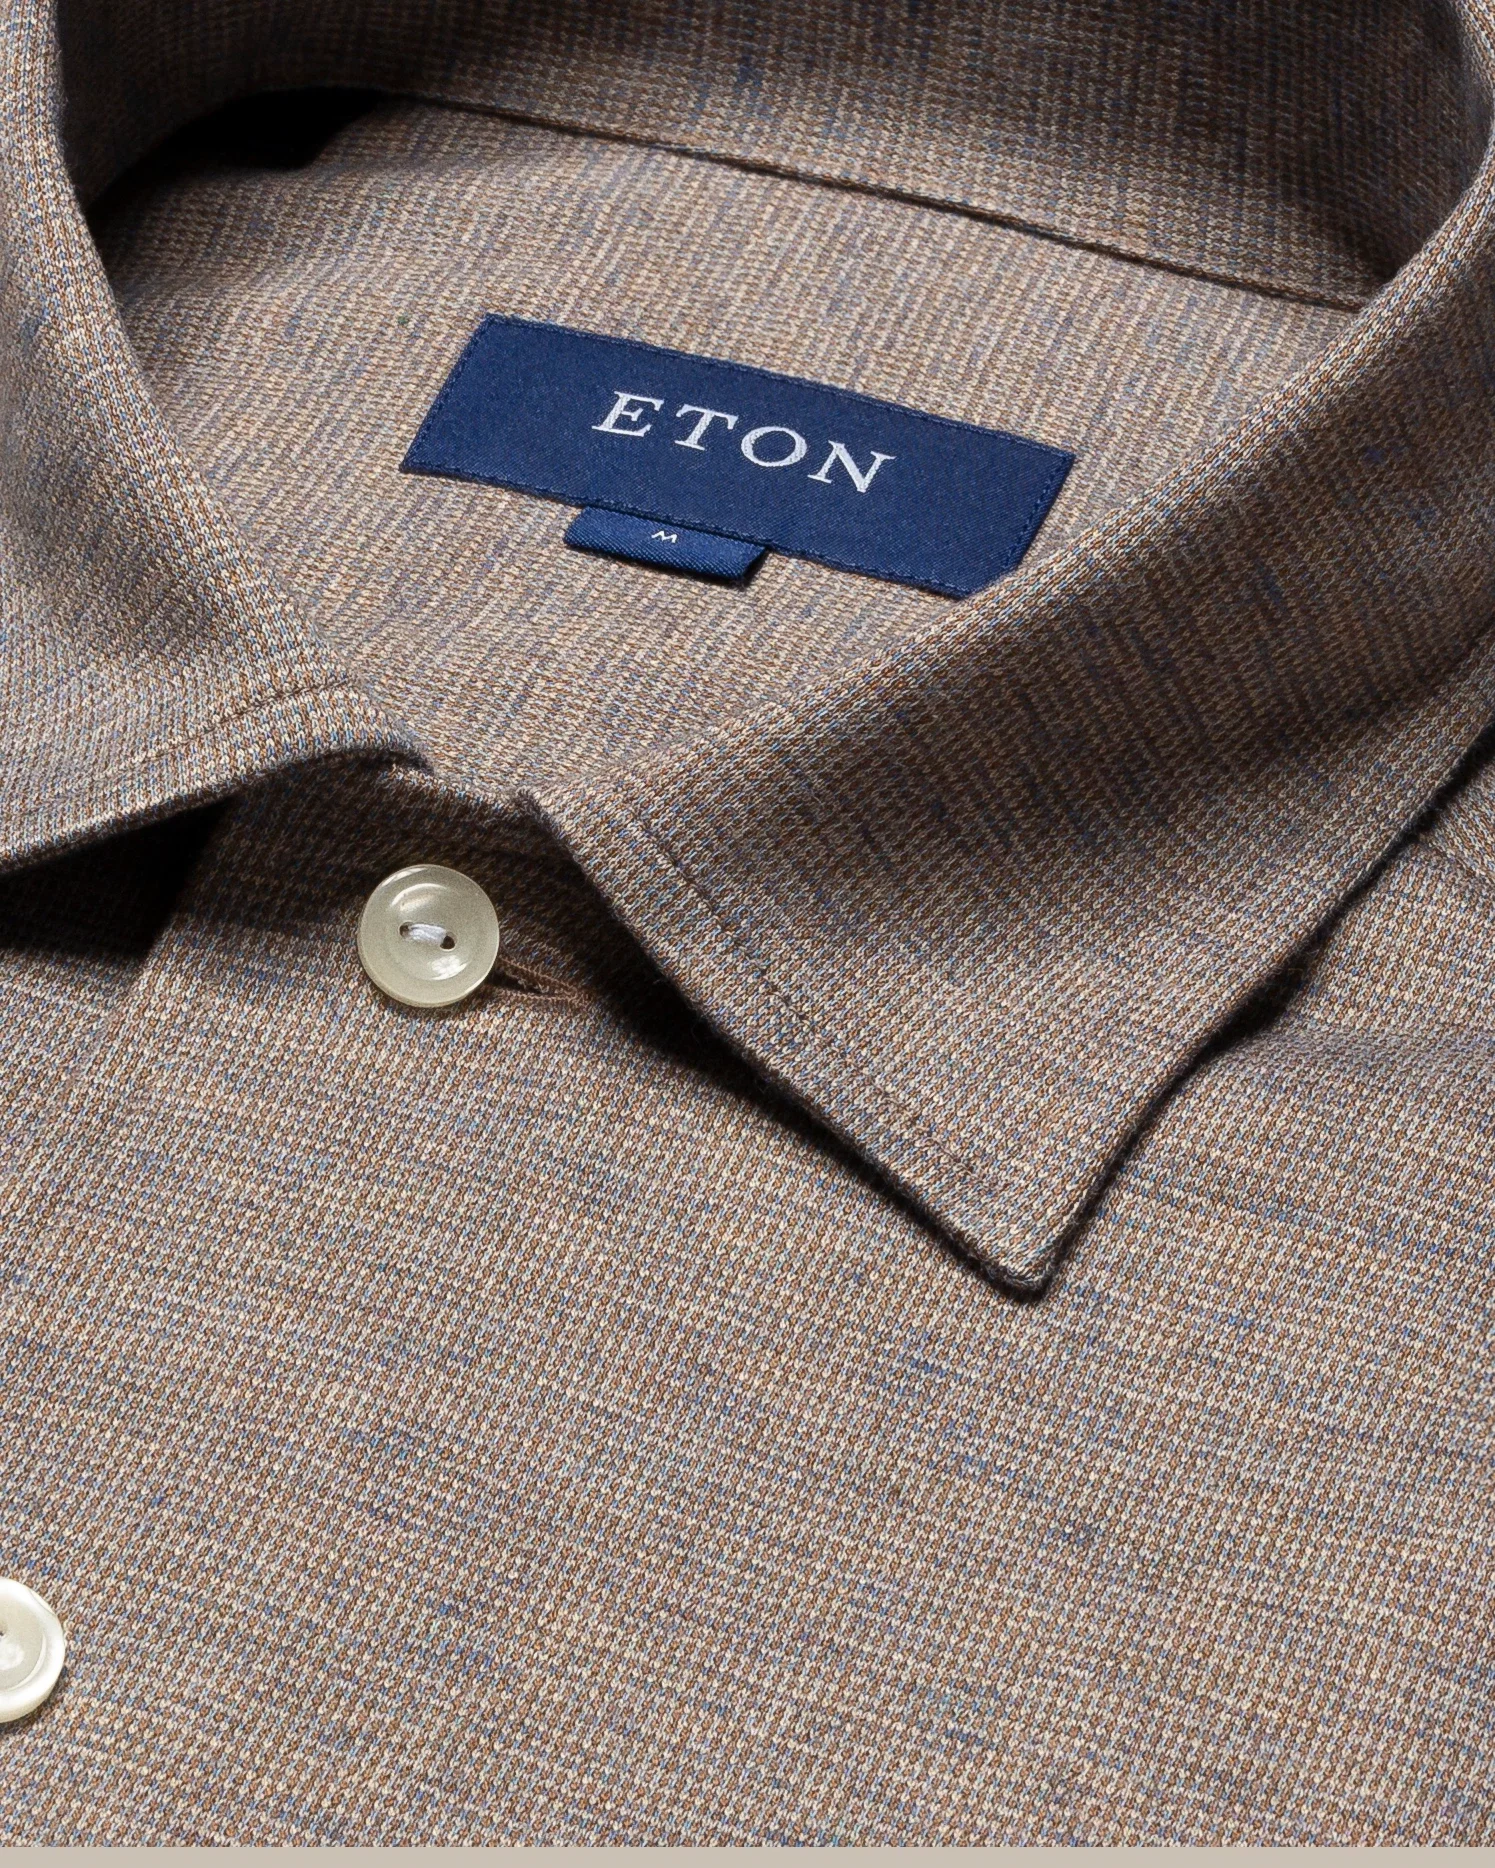 Eton - light brown mouline jersey shirt